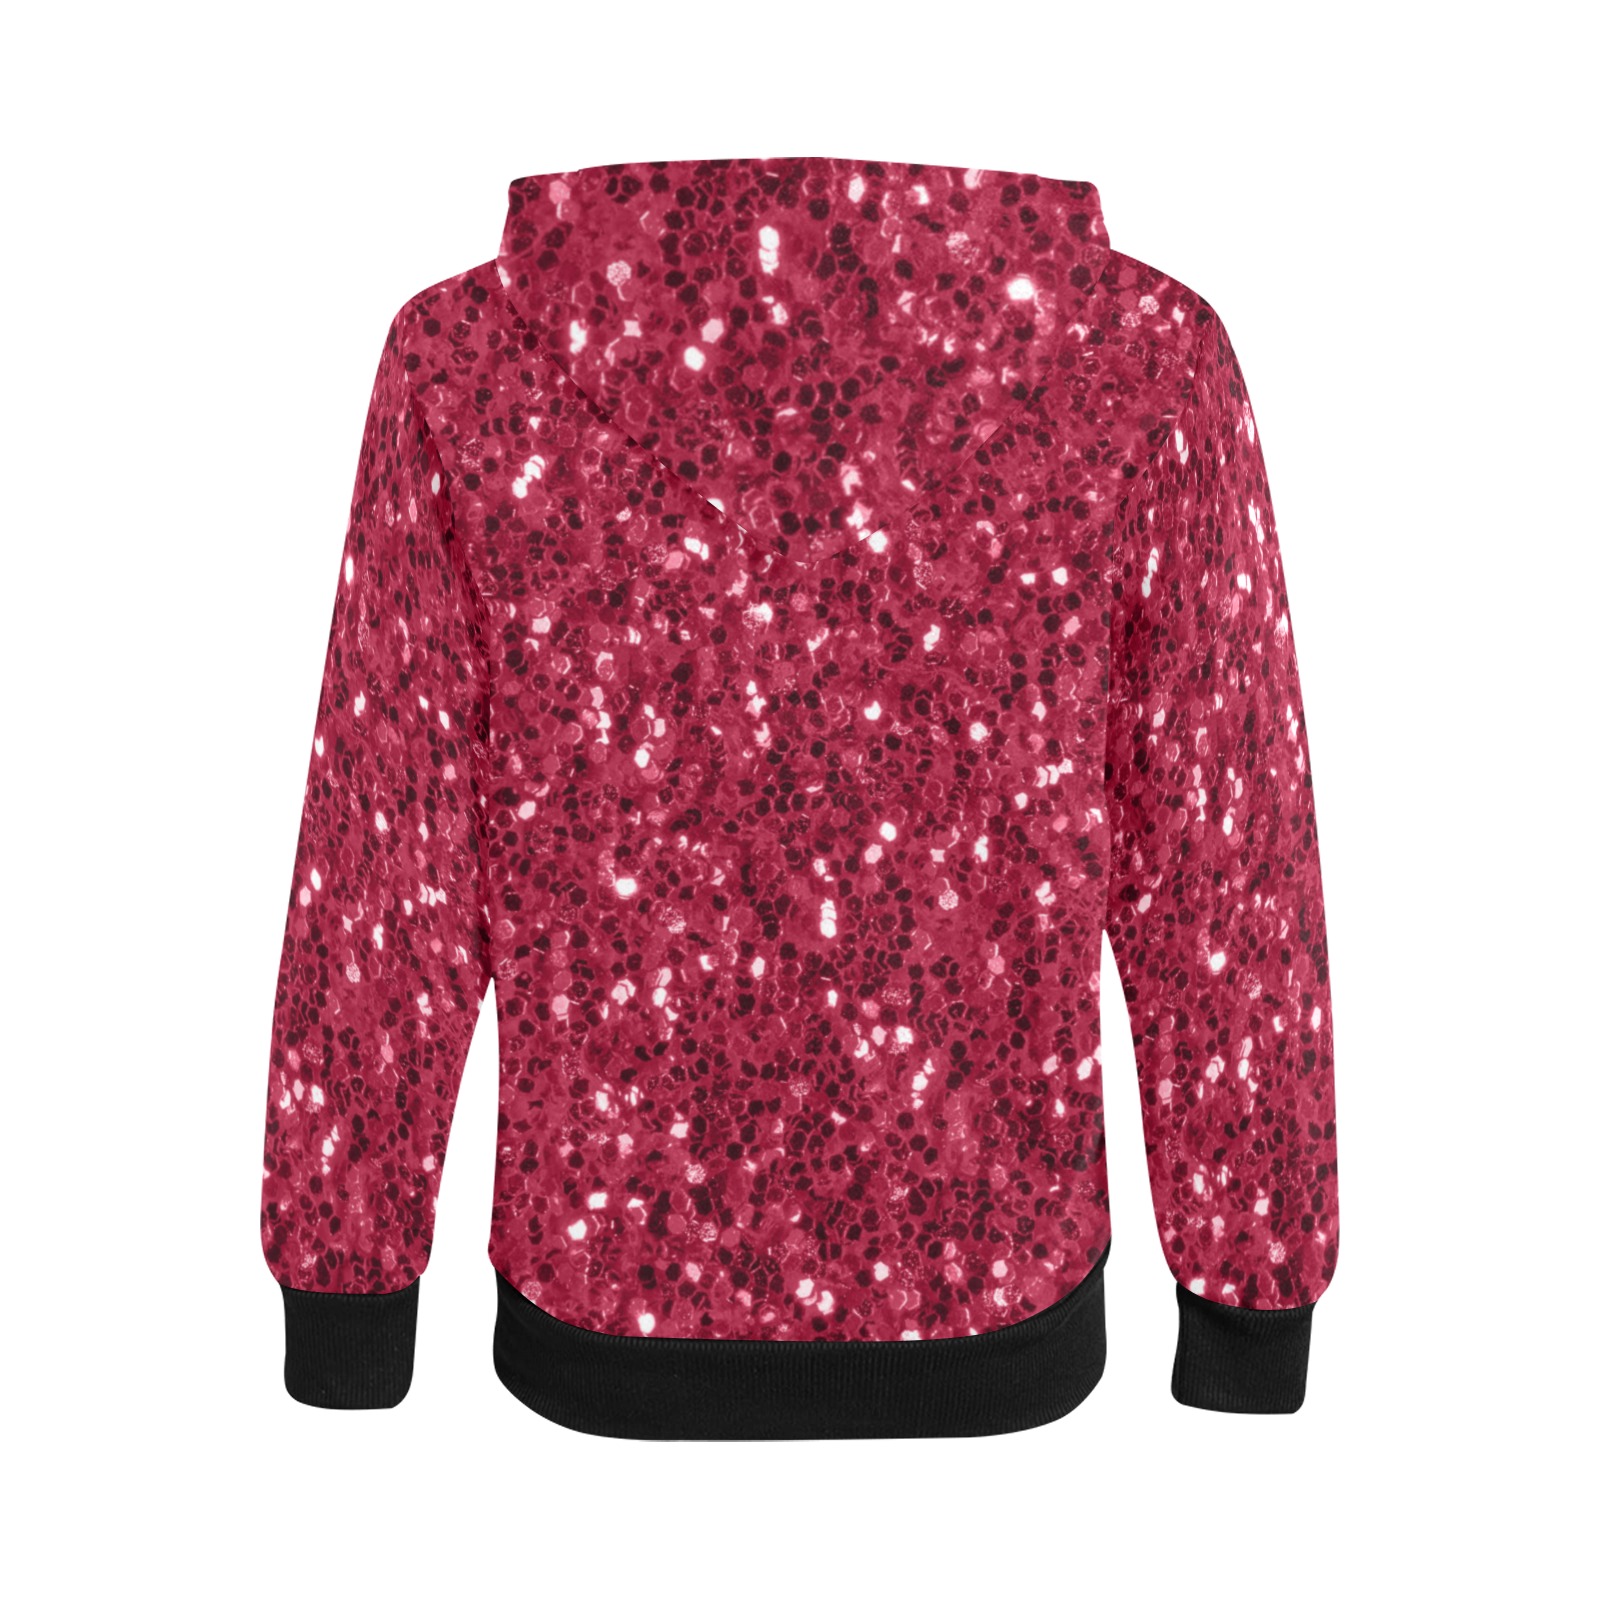 Magenta dark pink red faux sparkles glitter Kids' All Over Print Full Zip Hoodie (Model H39)